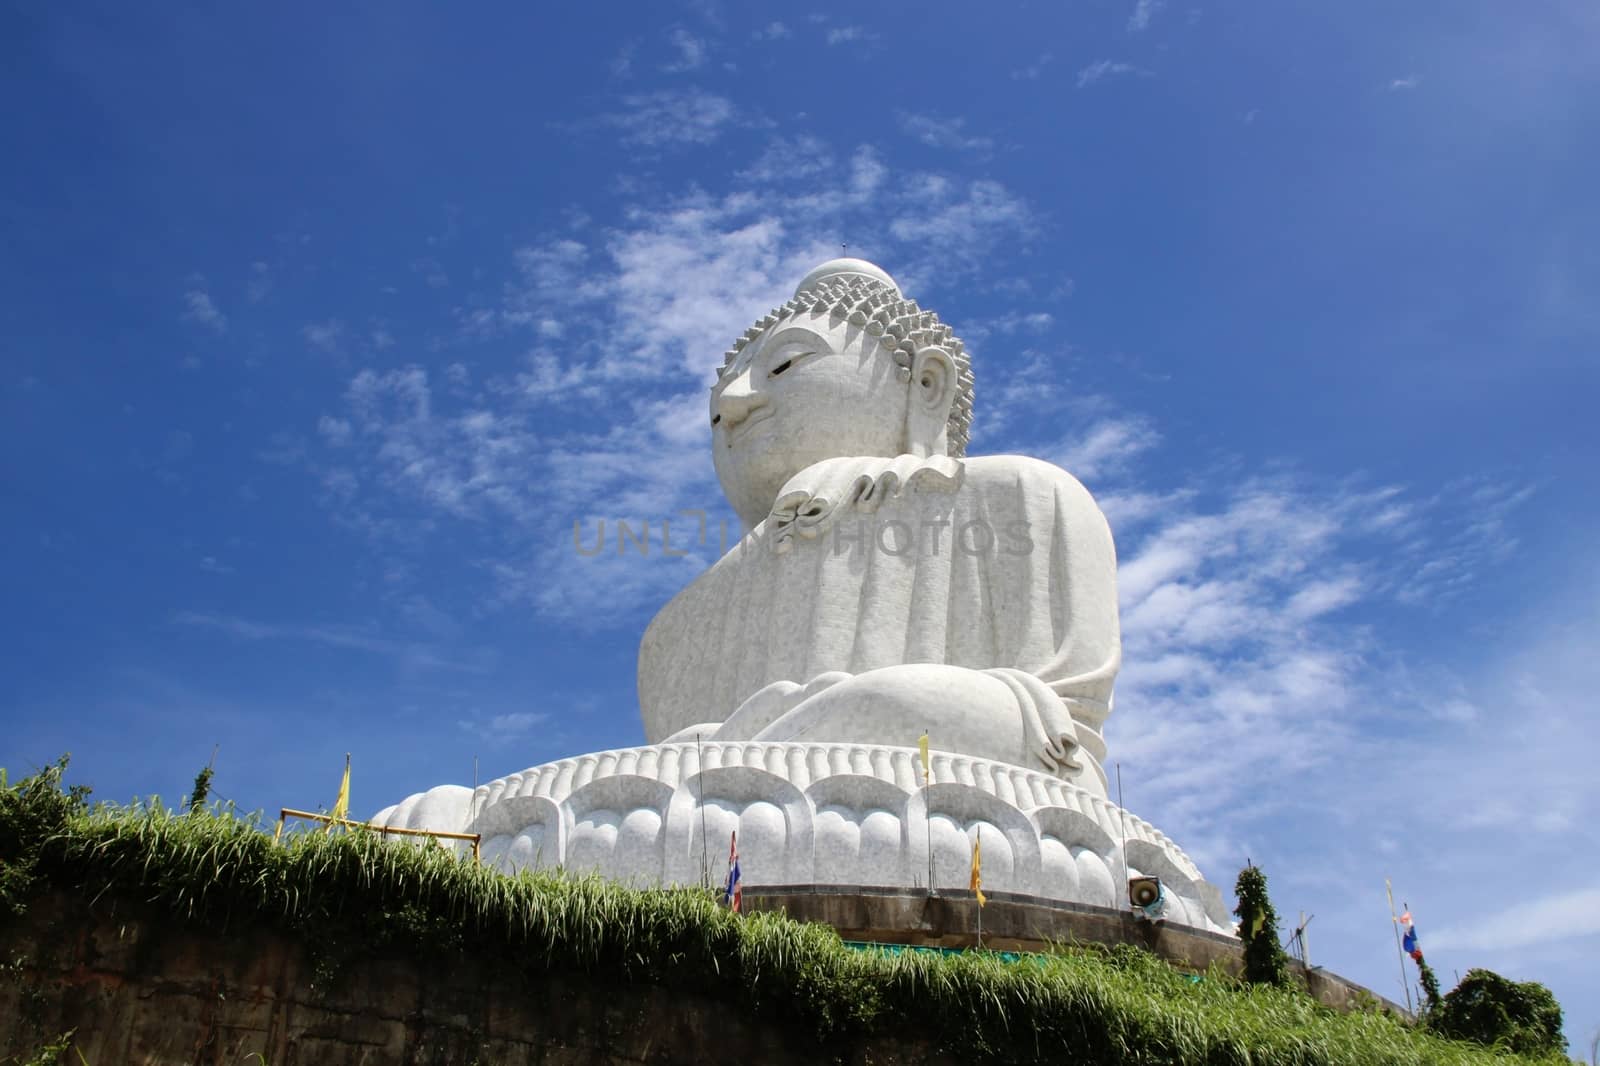 Big Budha of Phuket with a beautiful blue sky